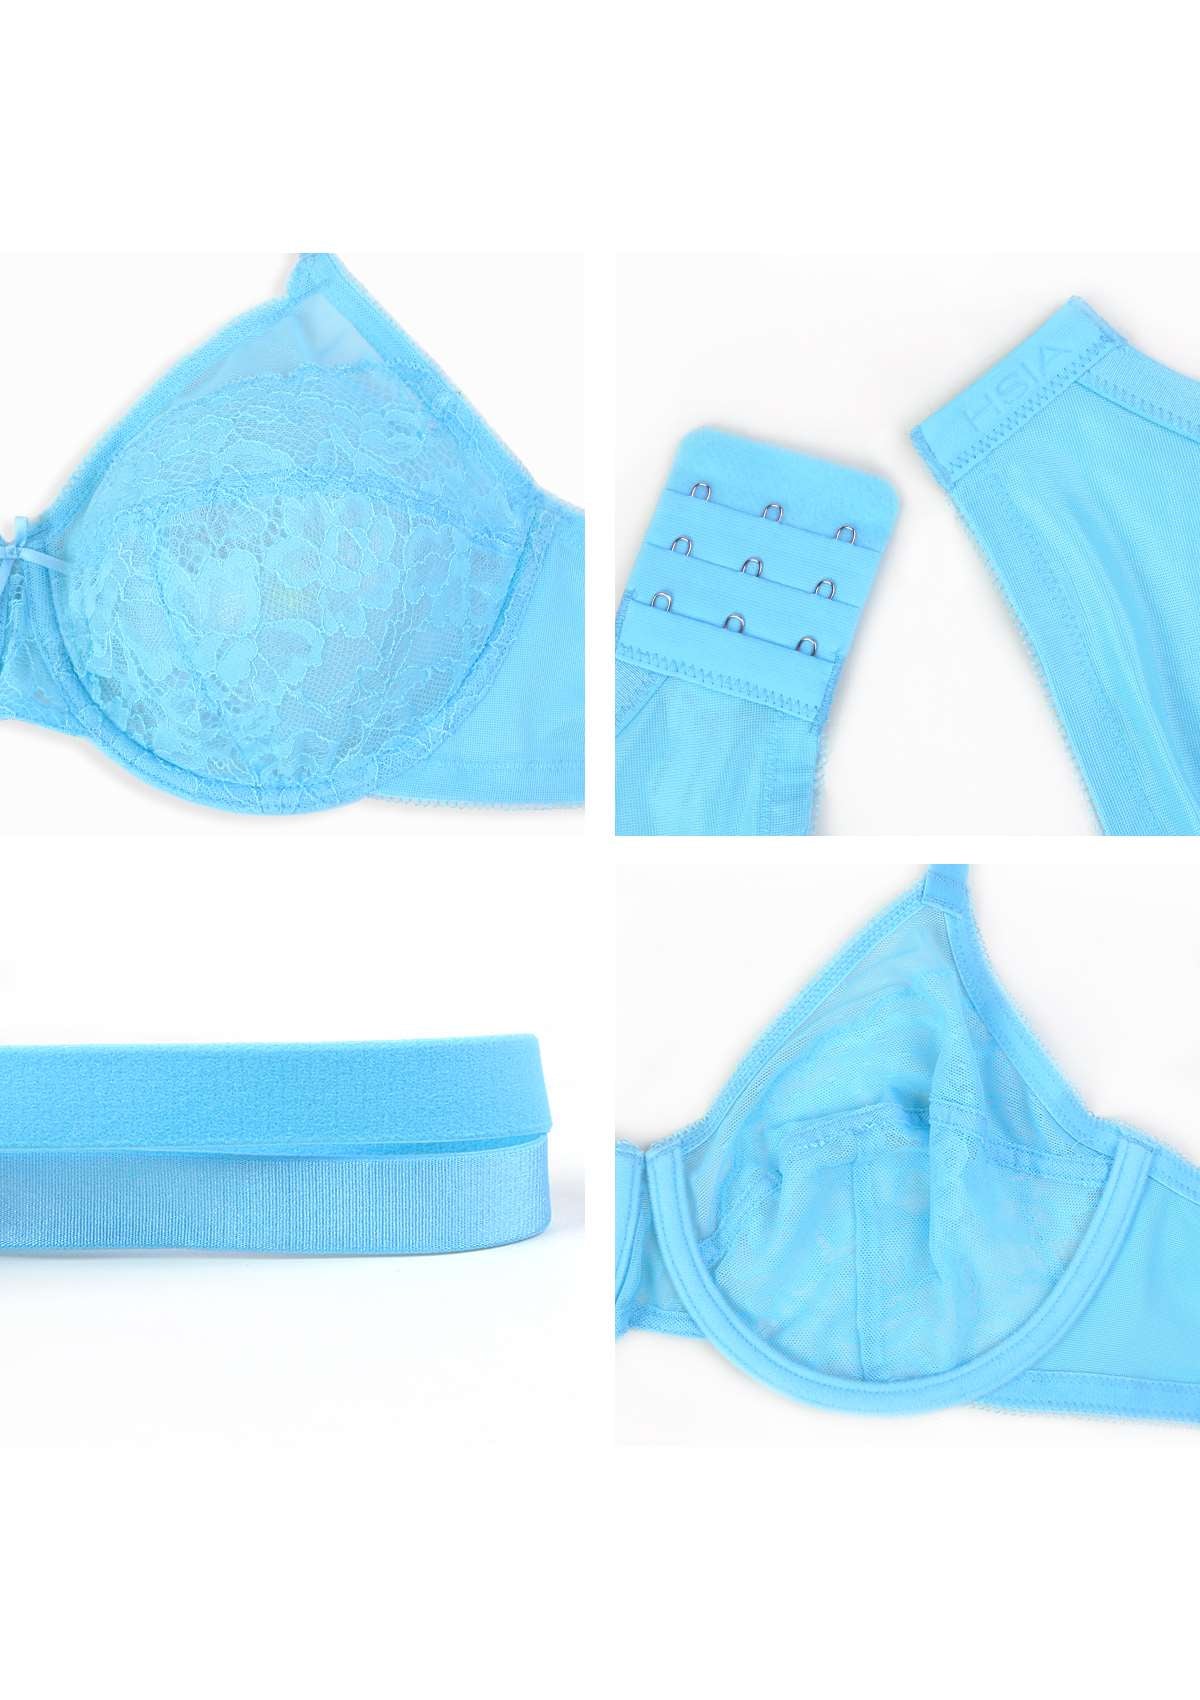 HSIA Enchante Minimizer Lace Bra: Full Support For Heavy Breasts - Capri Blue / 44 / D